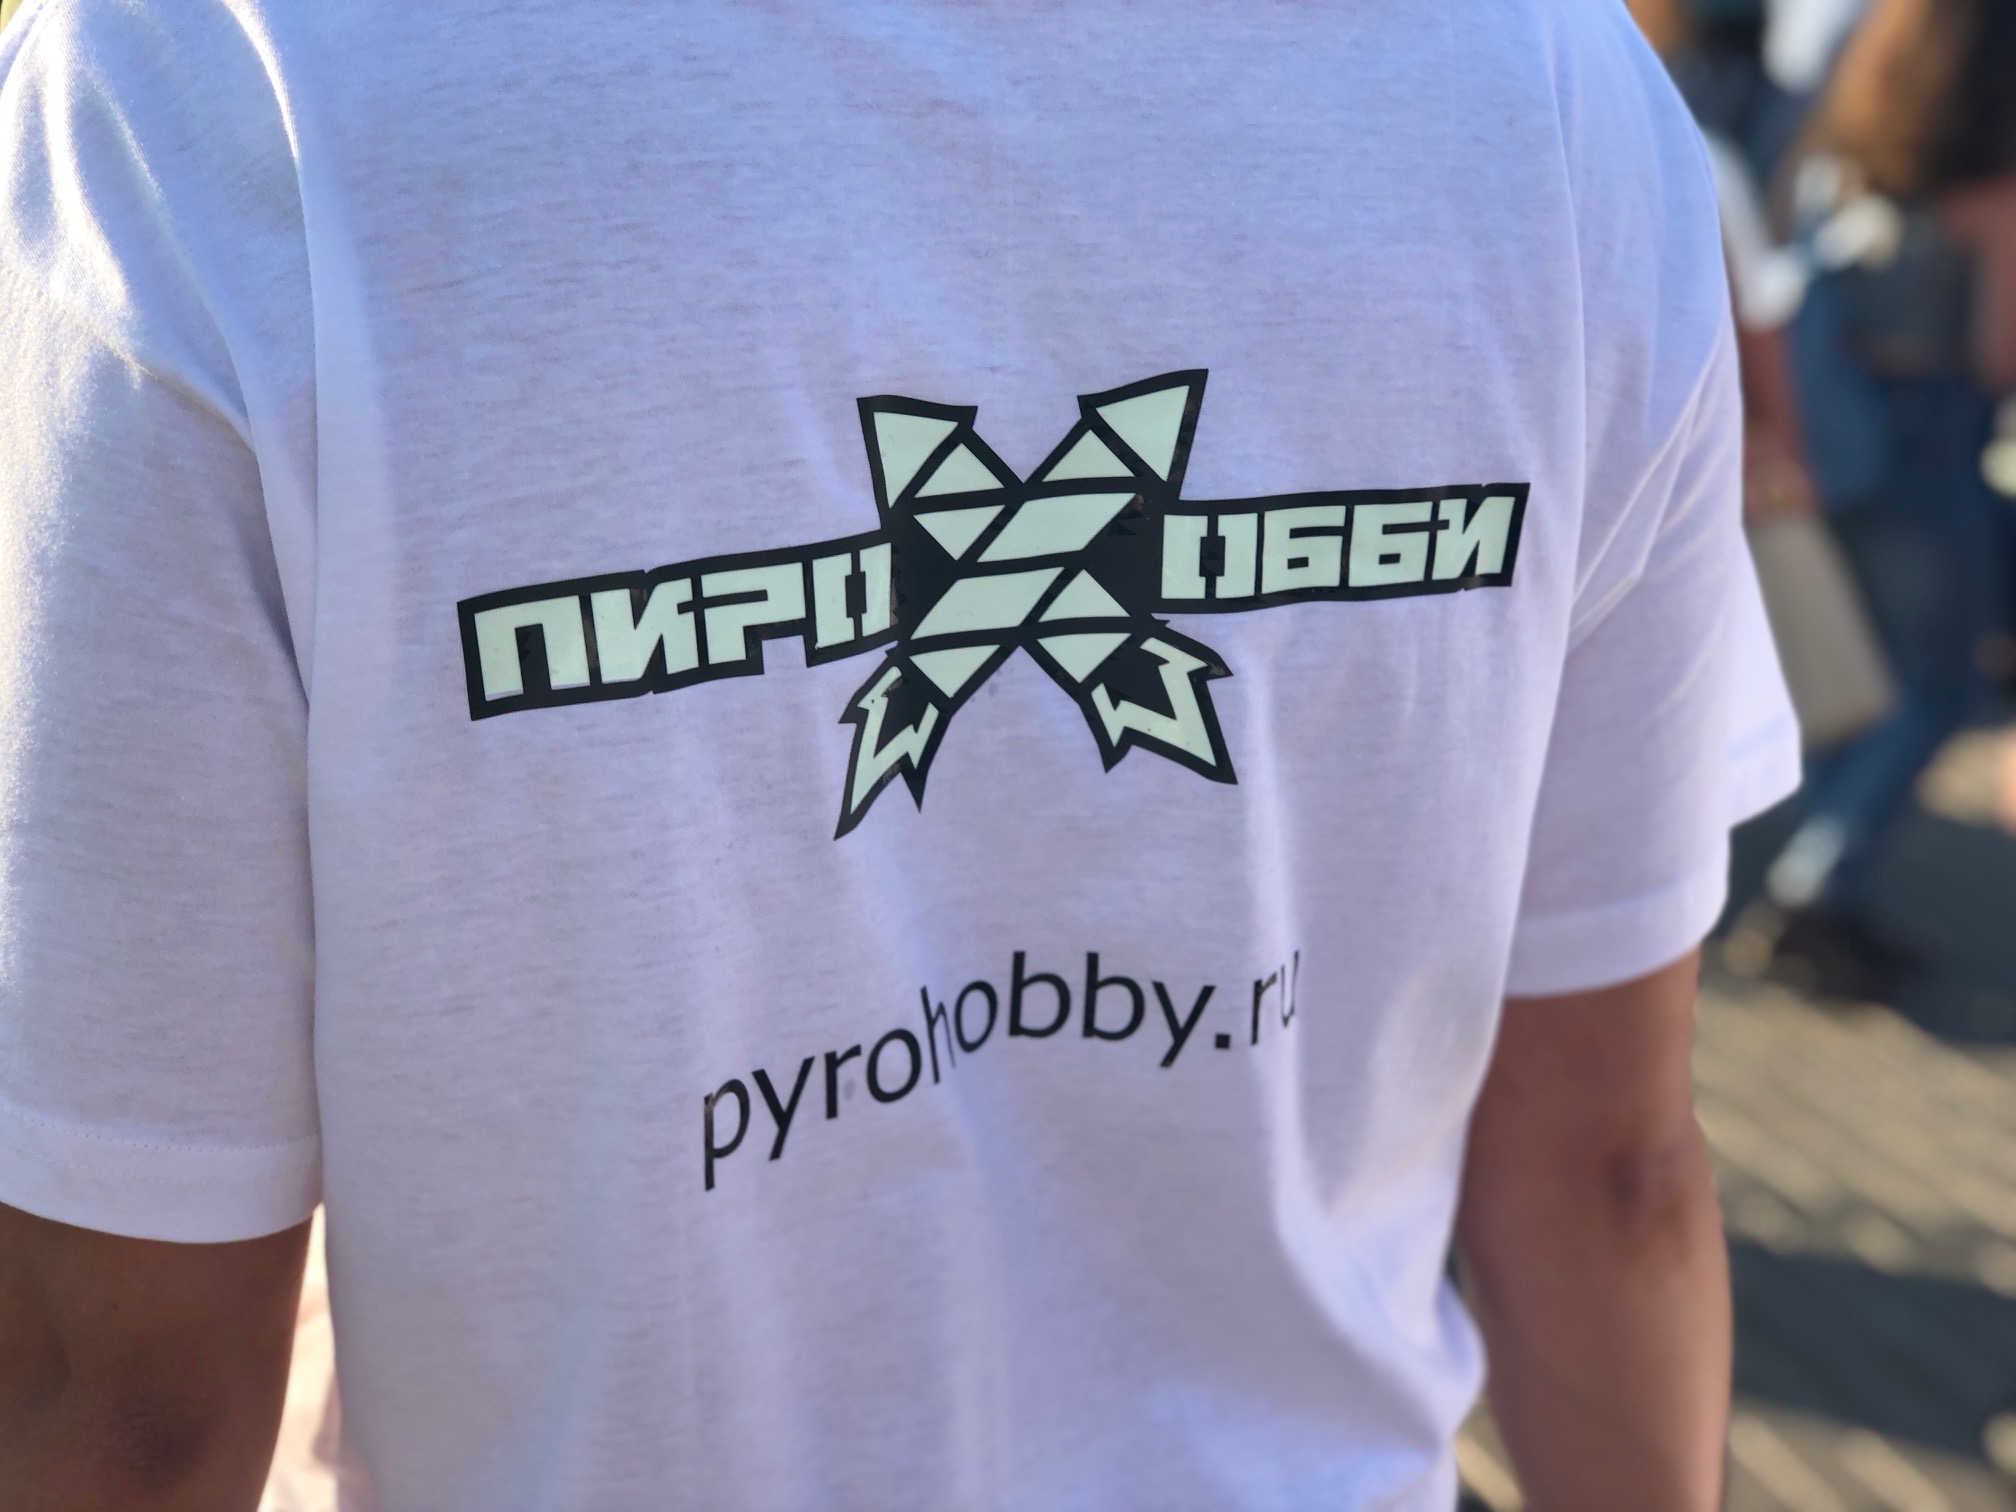 Команда Пирохобби с фирменными логотипами